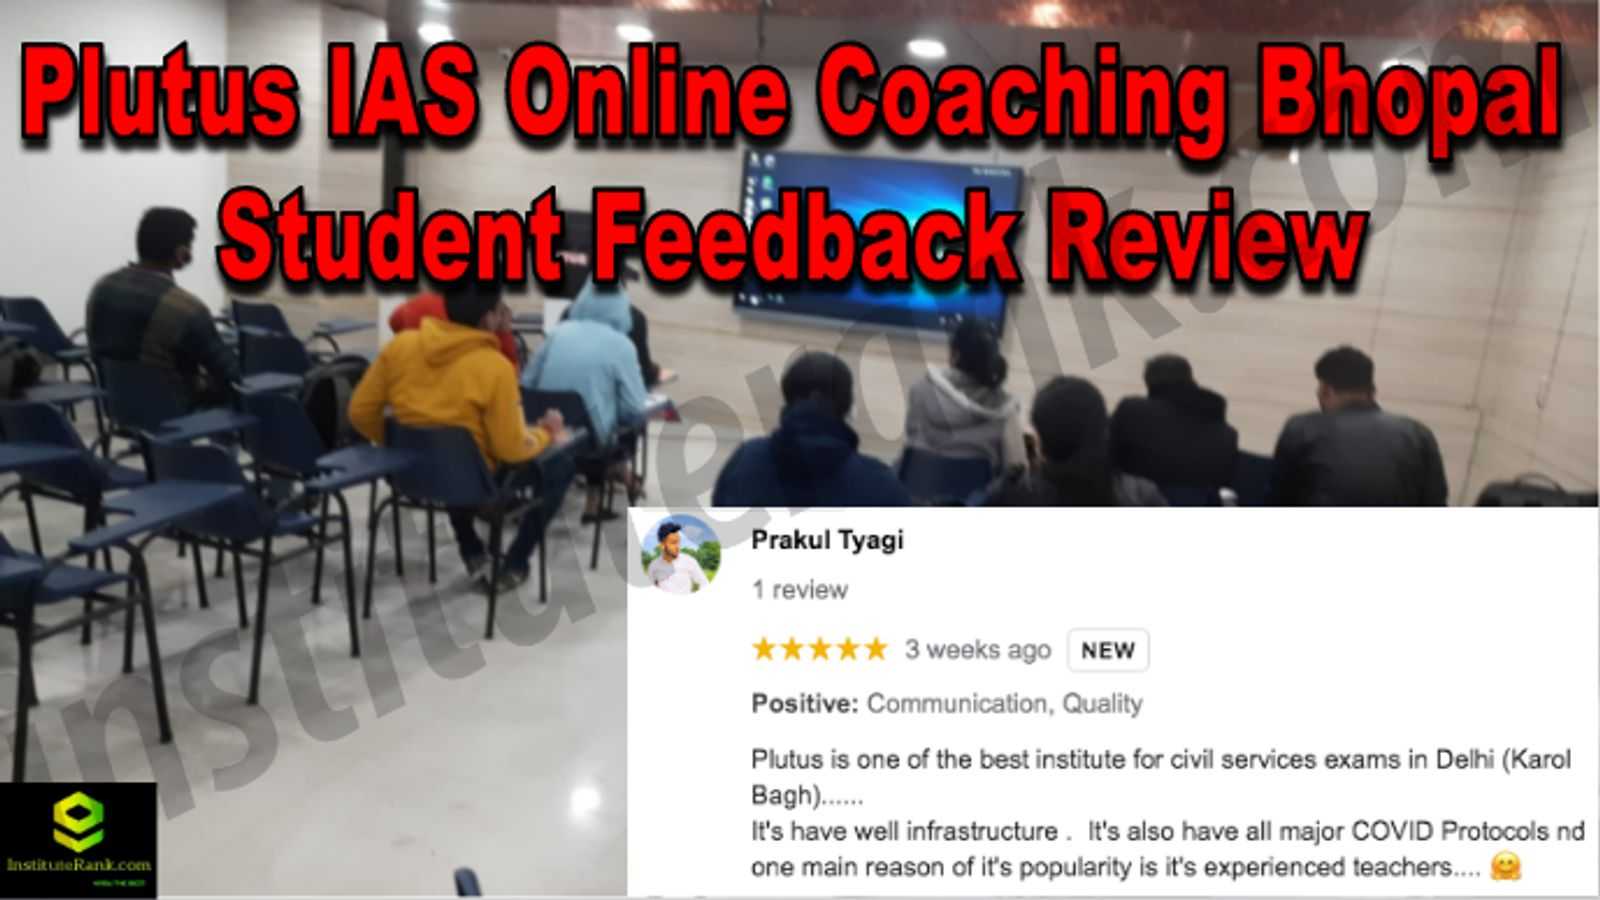 Plutus IAS Online Coaching Bhopal Student Feedback Reviews